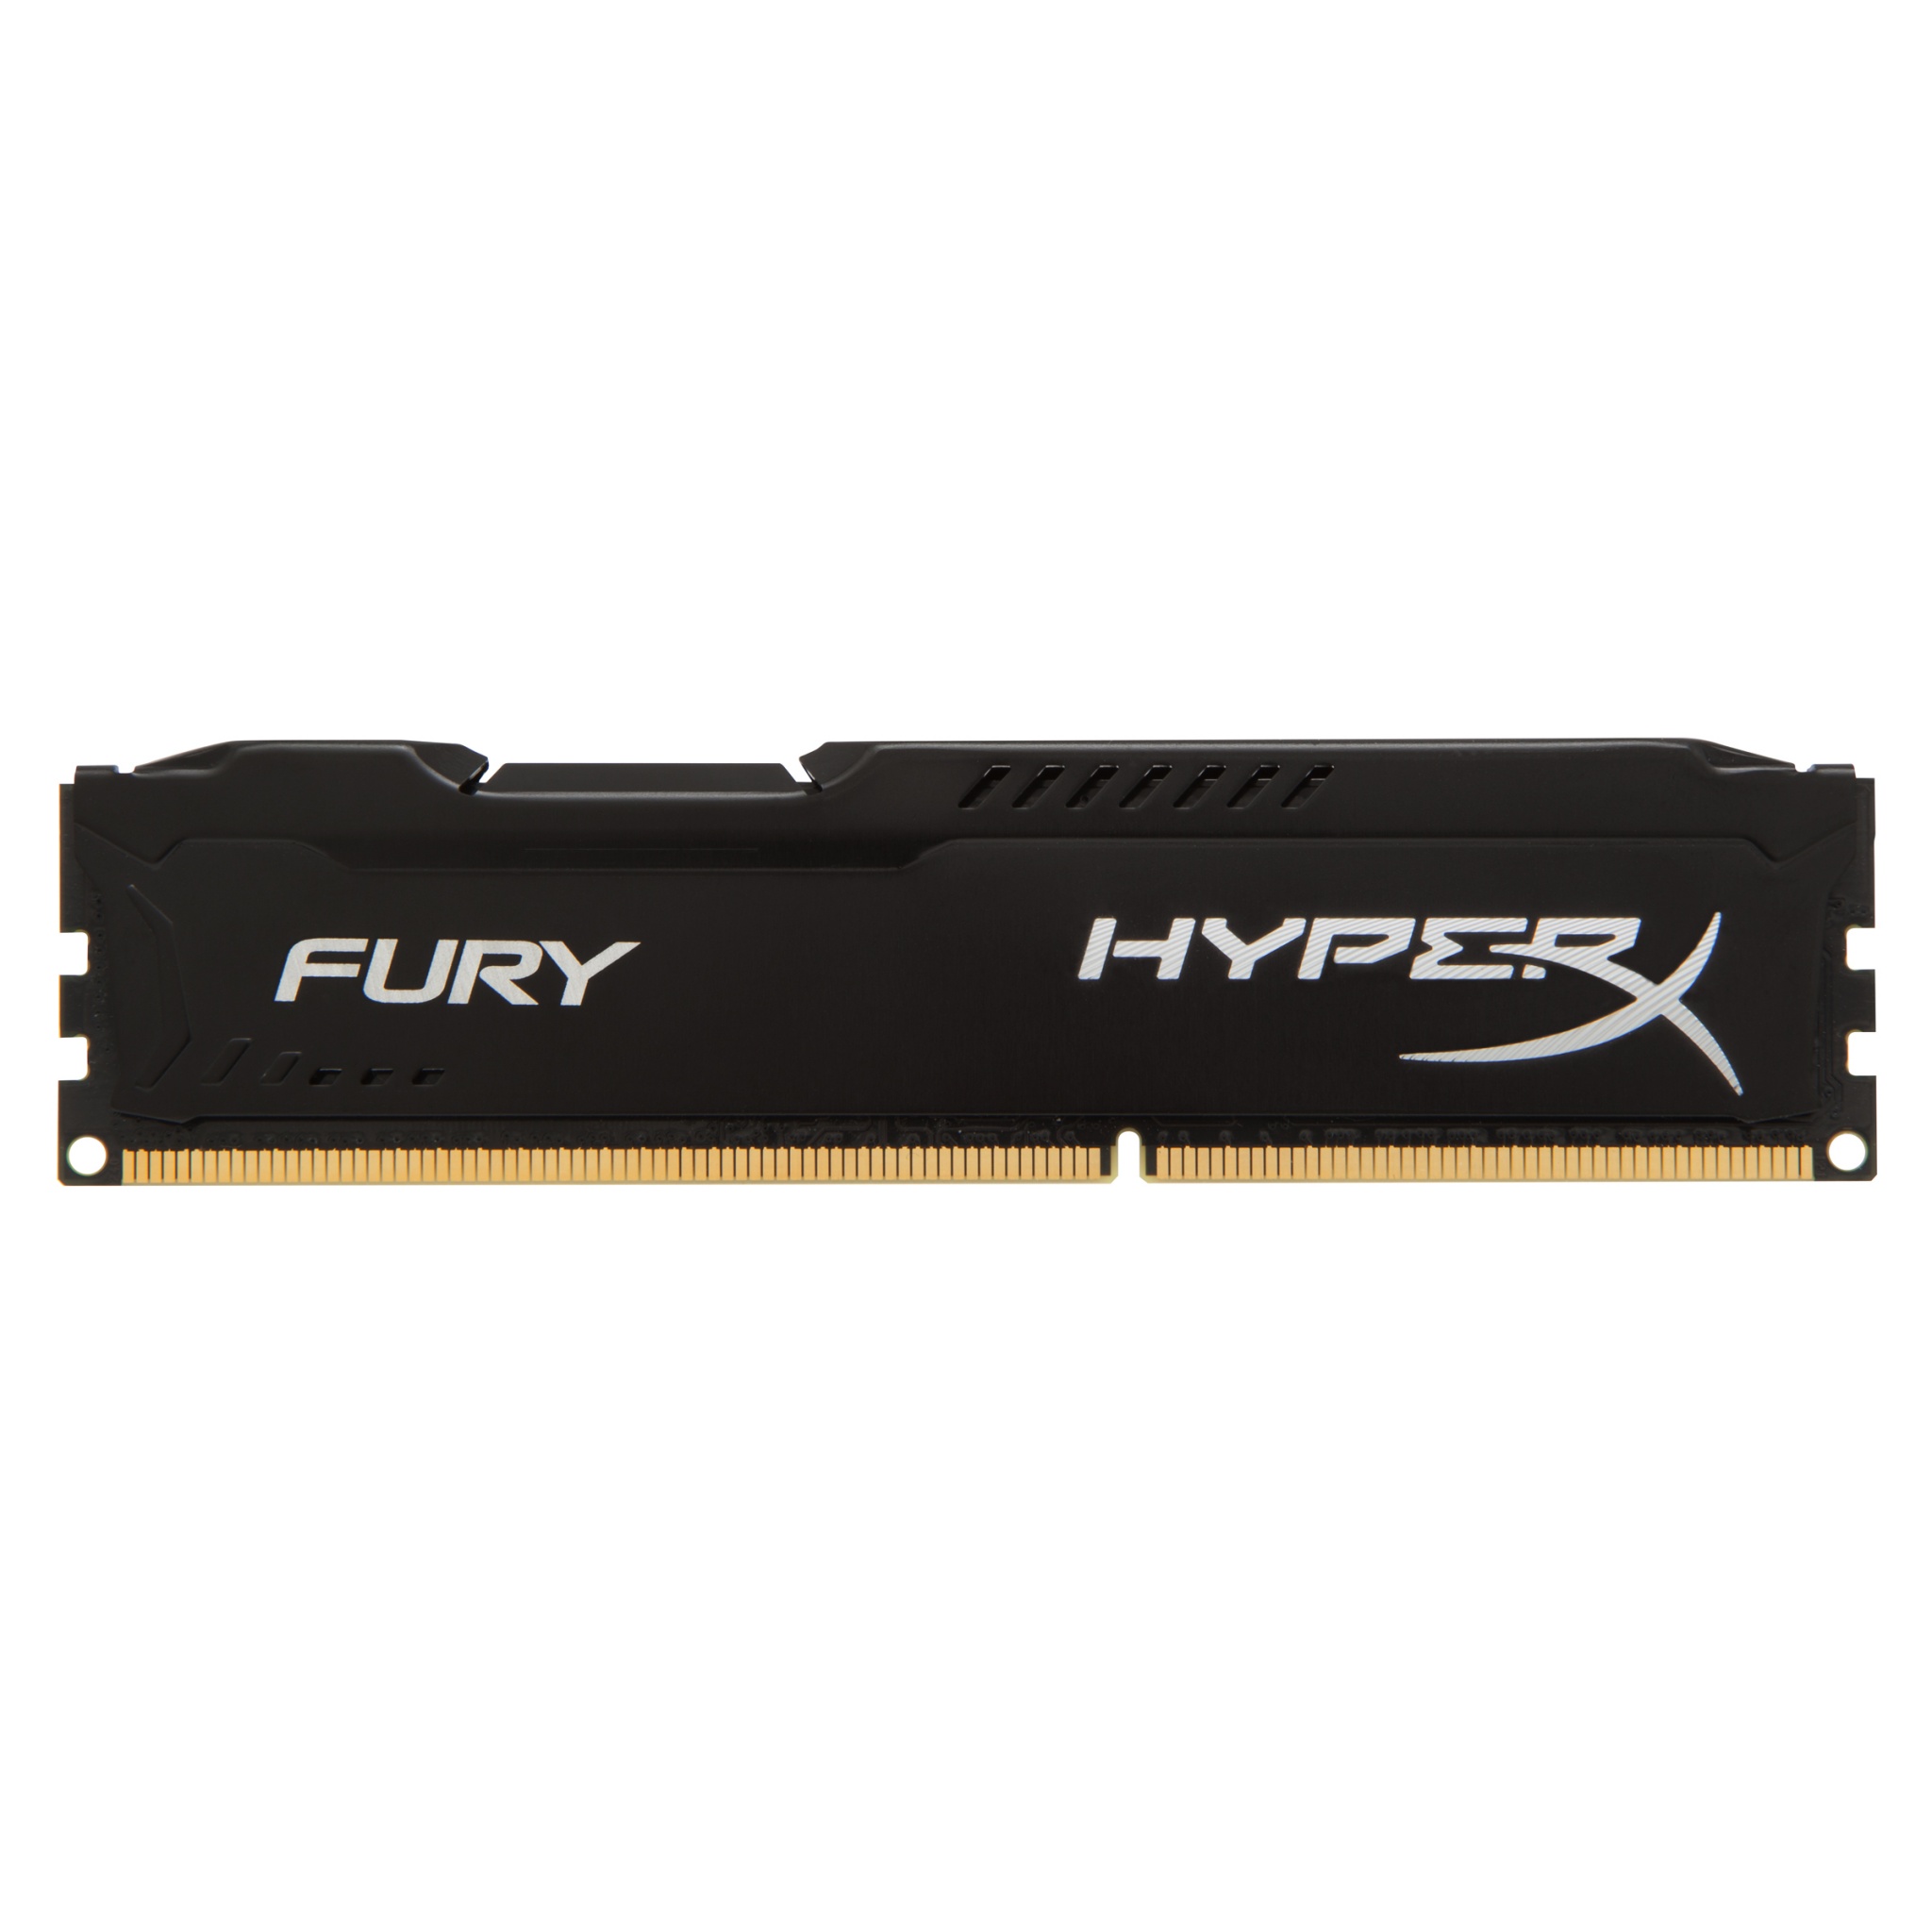 HyperX HX316C10FB/4 FURY Series 4 GB DDR3 1600 MHz CL10 DIMM Memory Module Black